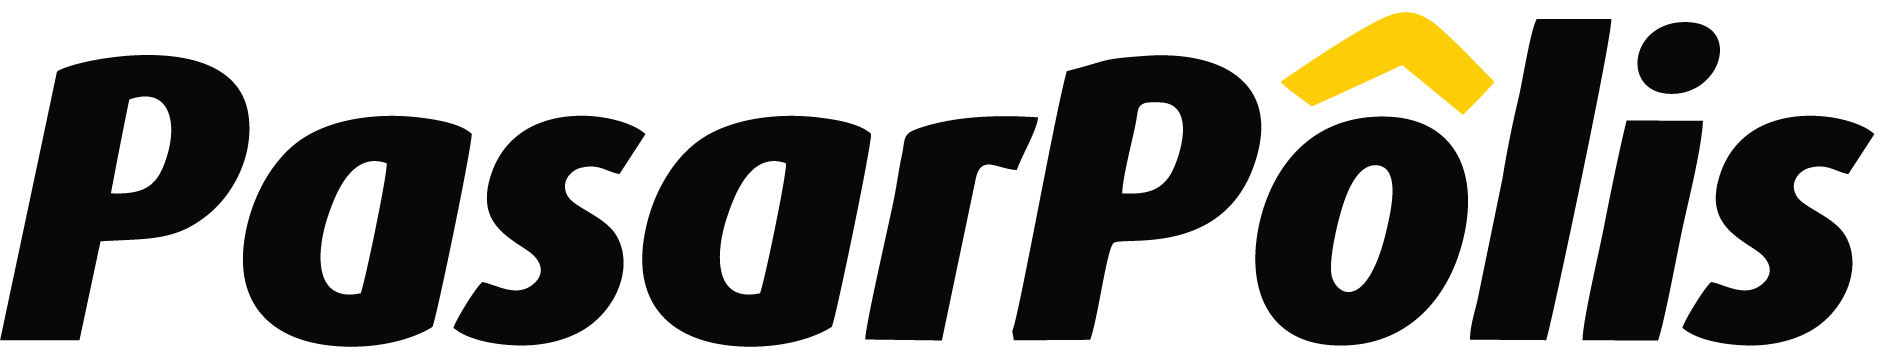 pasarpolis_logo